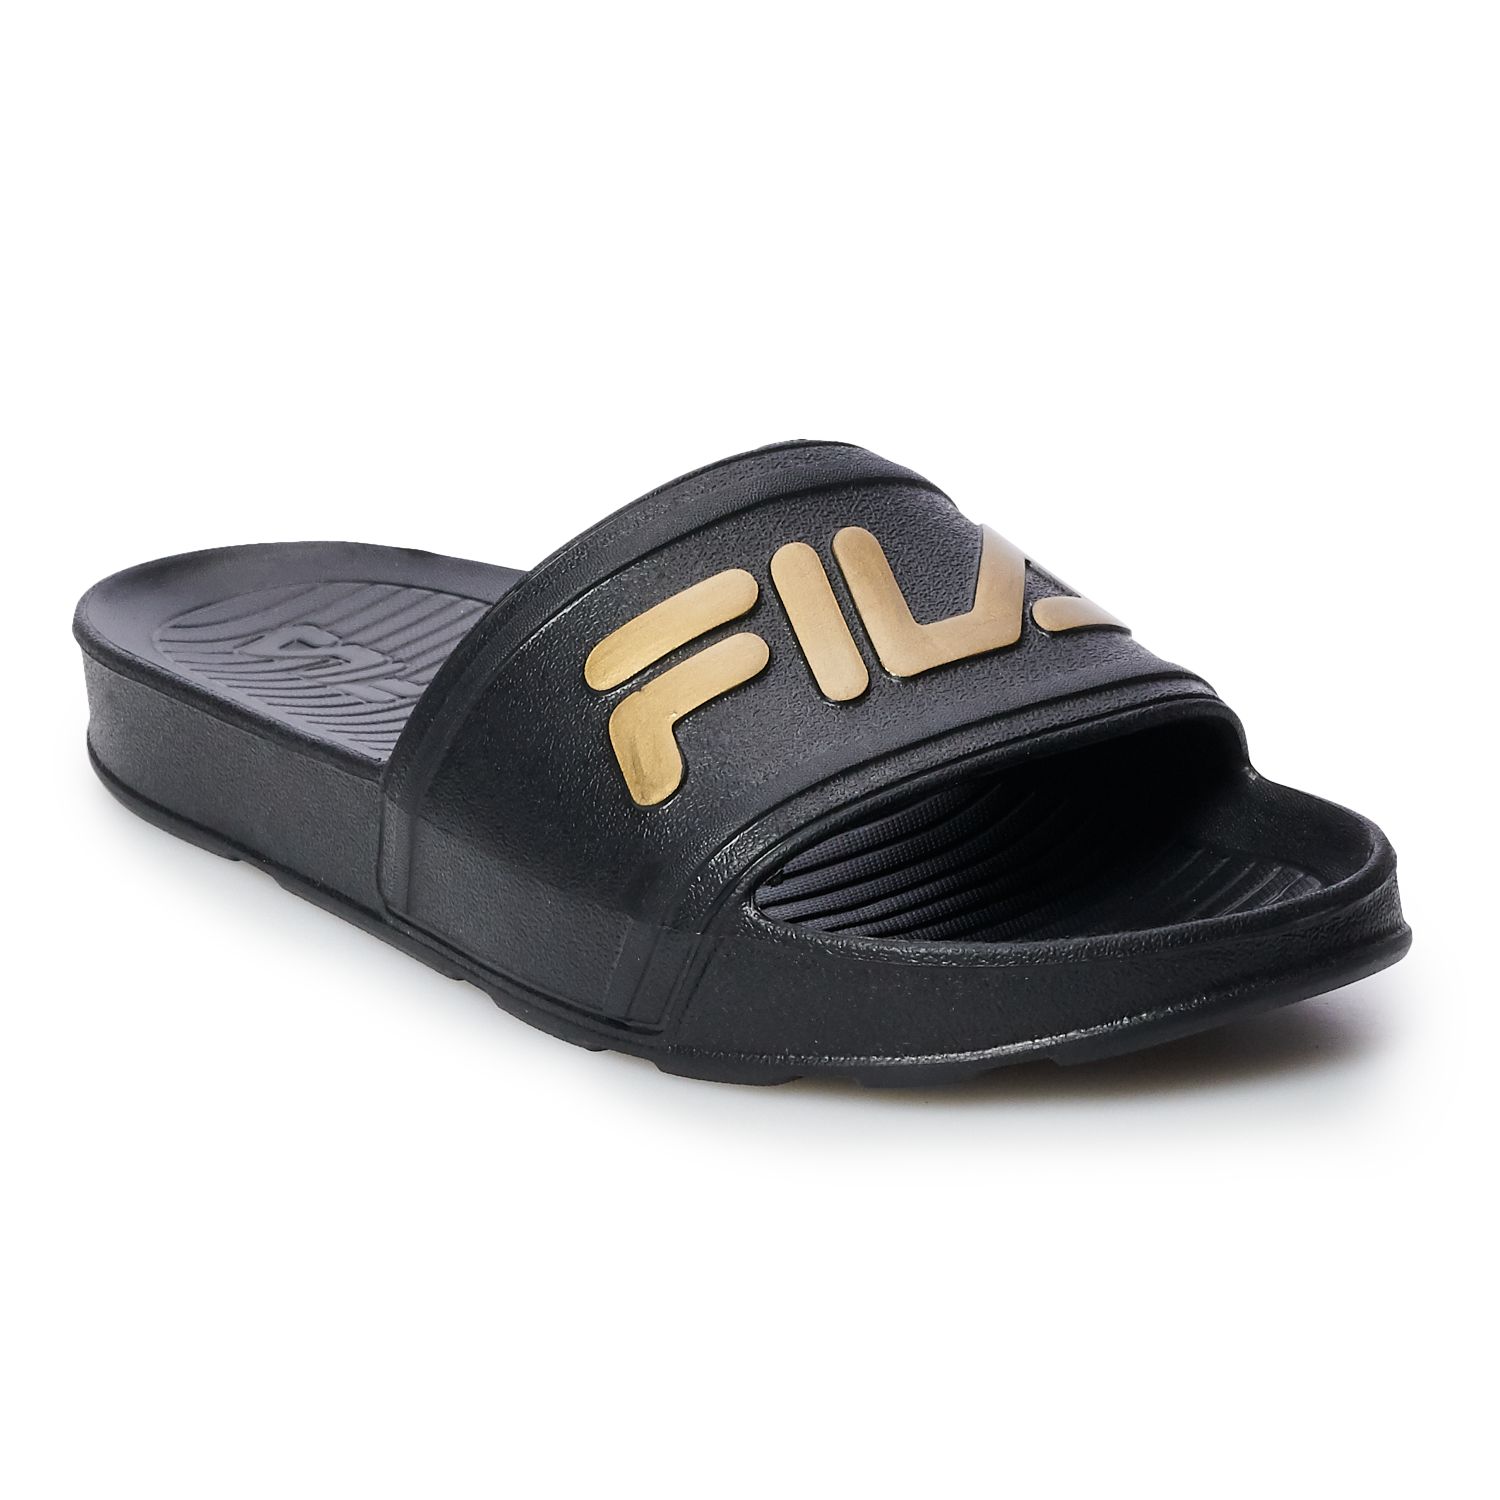 fila sandals black and gold